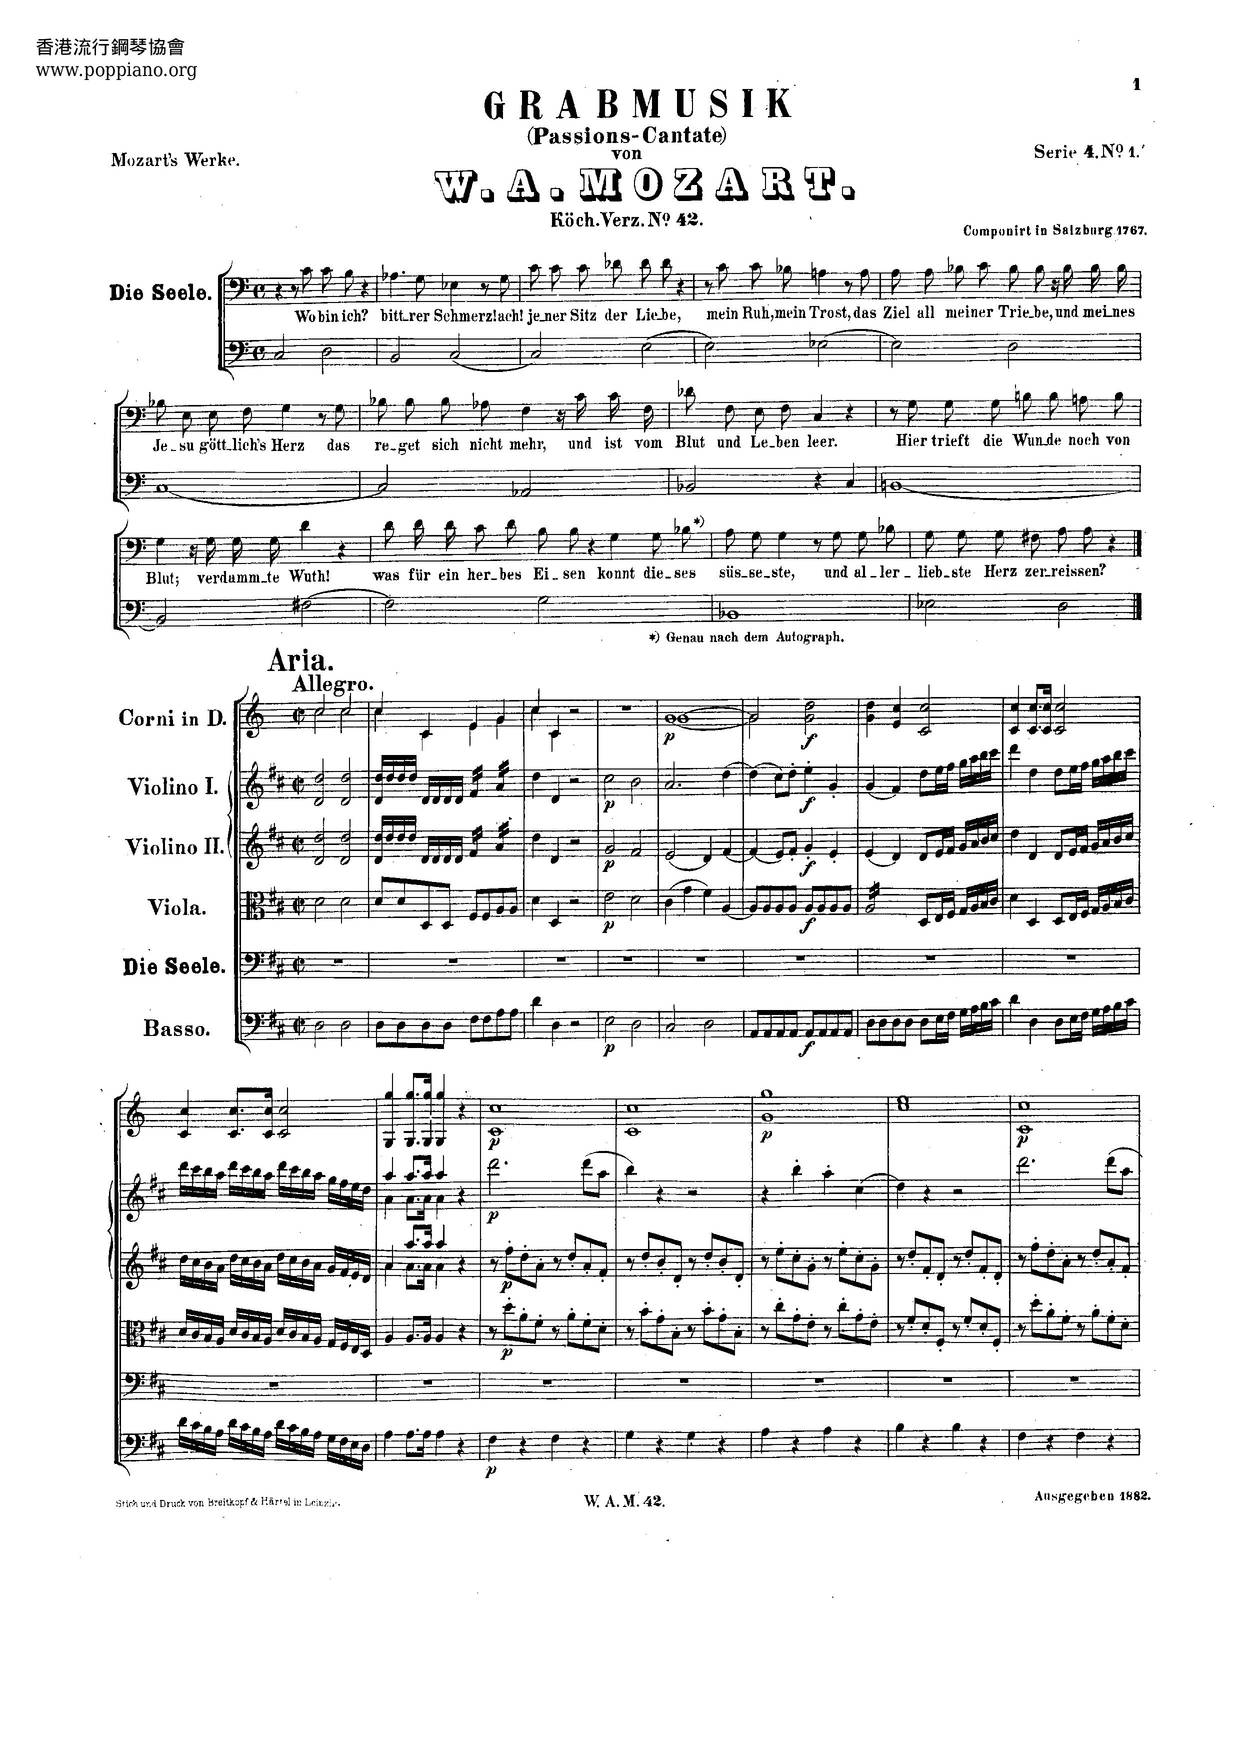 Grabmusik, K. 42/35A琴譜